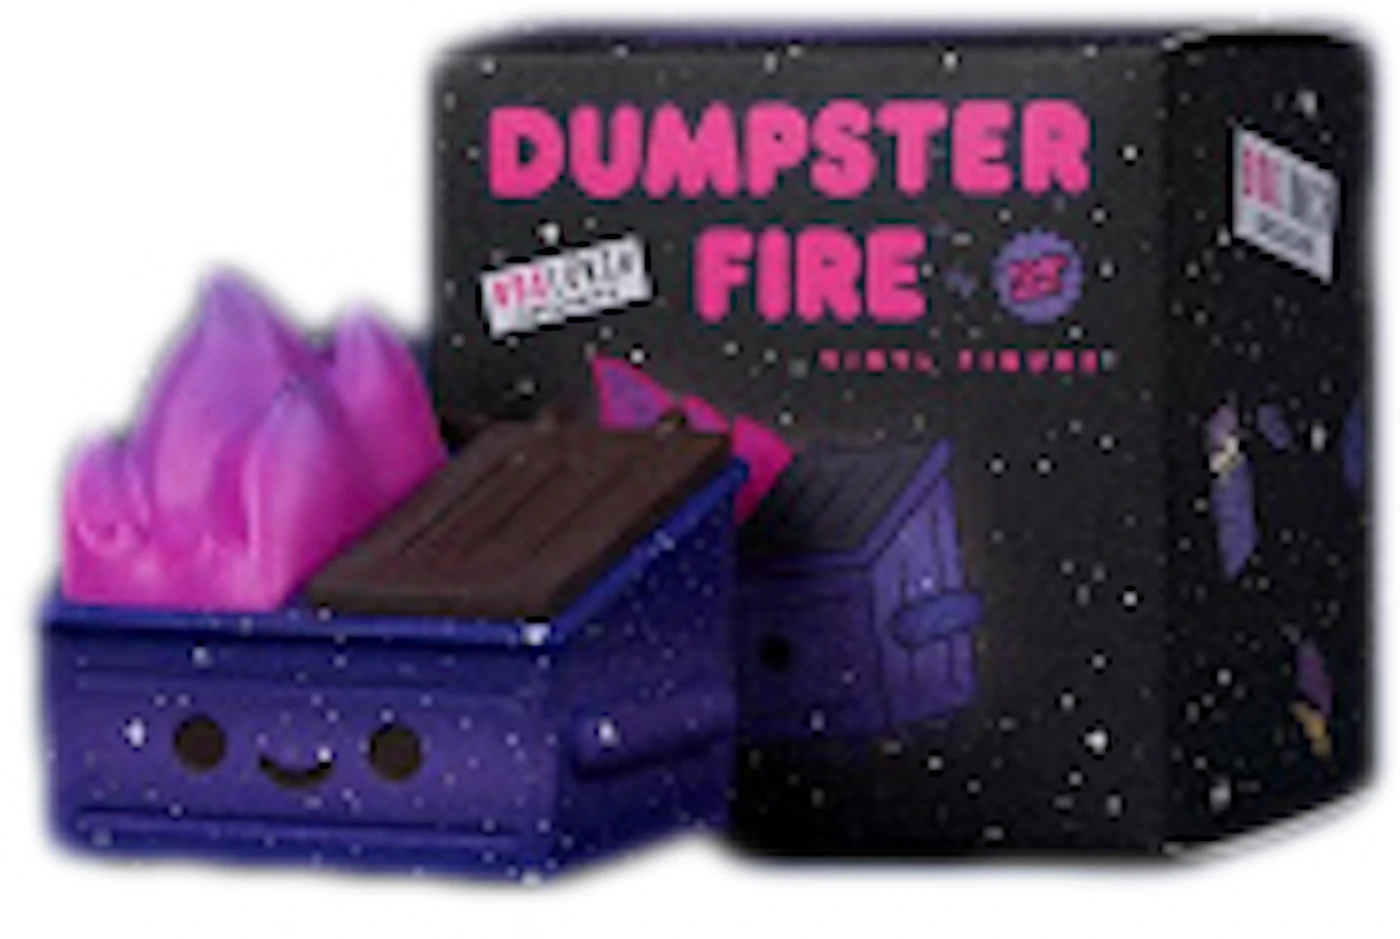 I'm Fine… Everythin's Fine Dumpster Fire Plush — Scrumptious